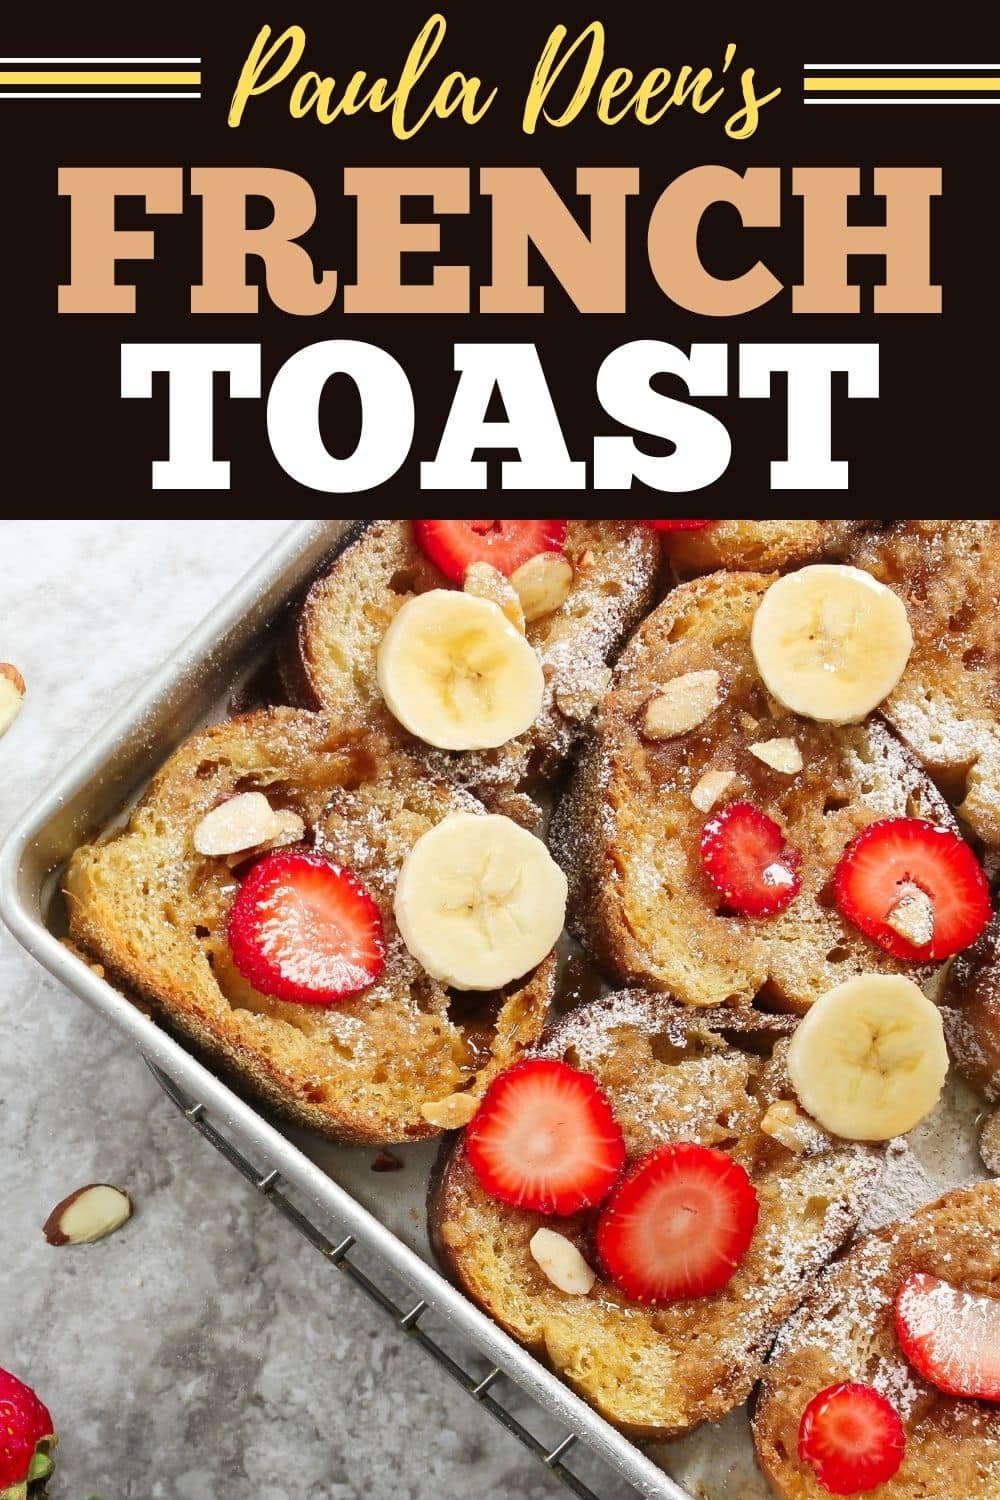 Paula Deen's French Toast - Insanely Good